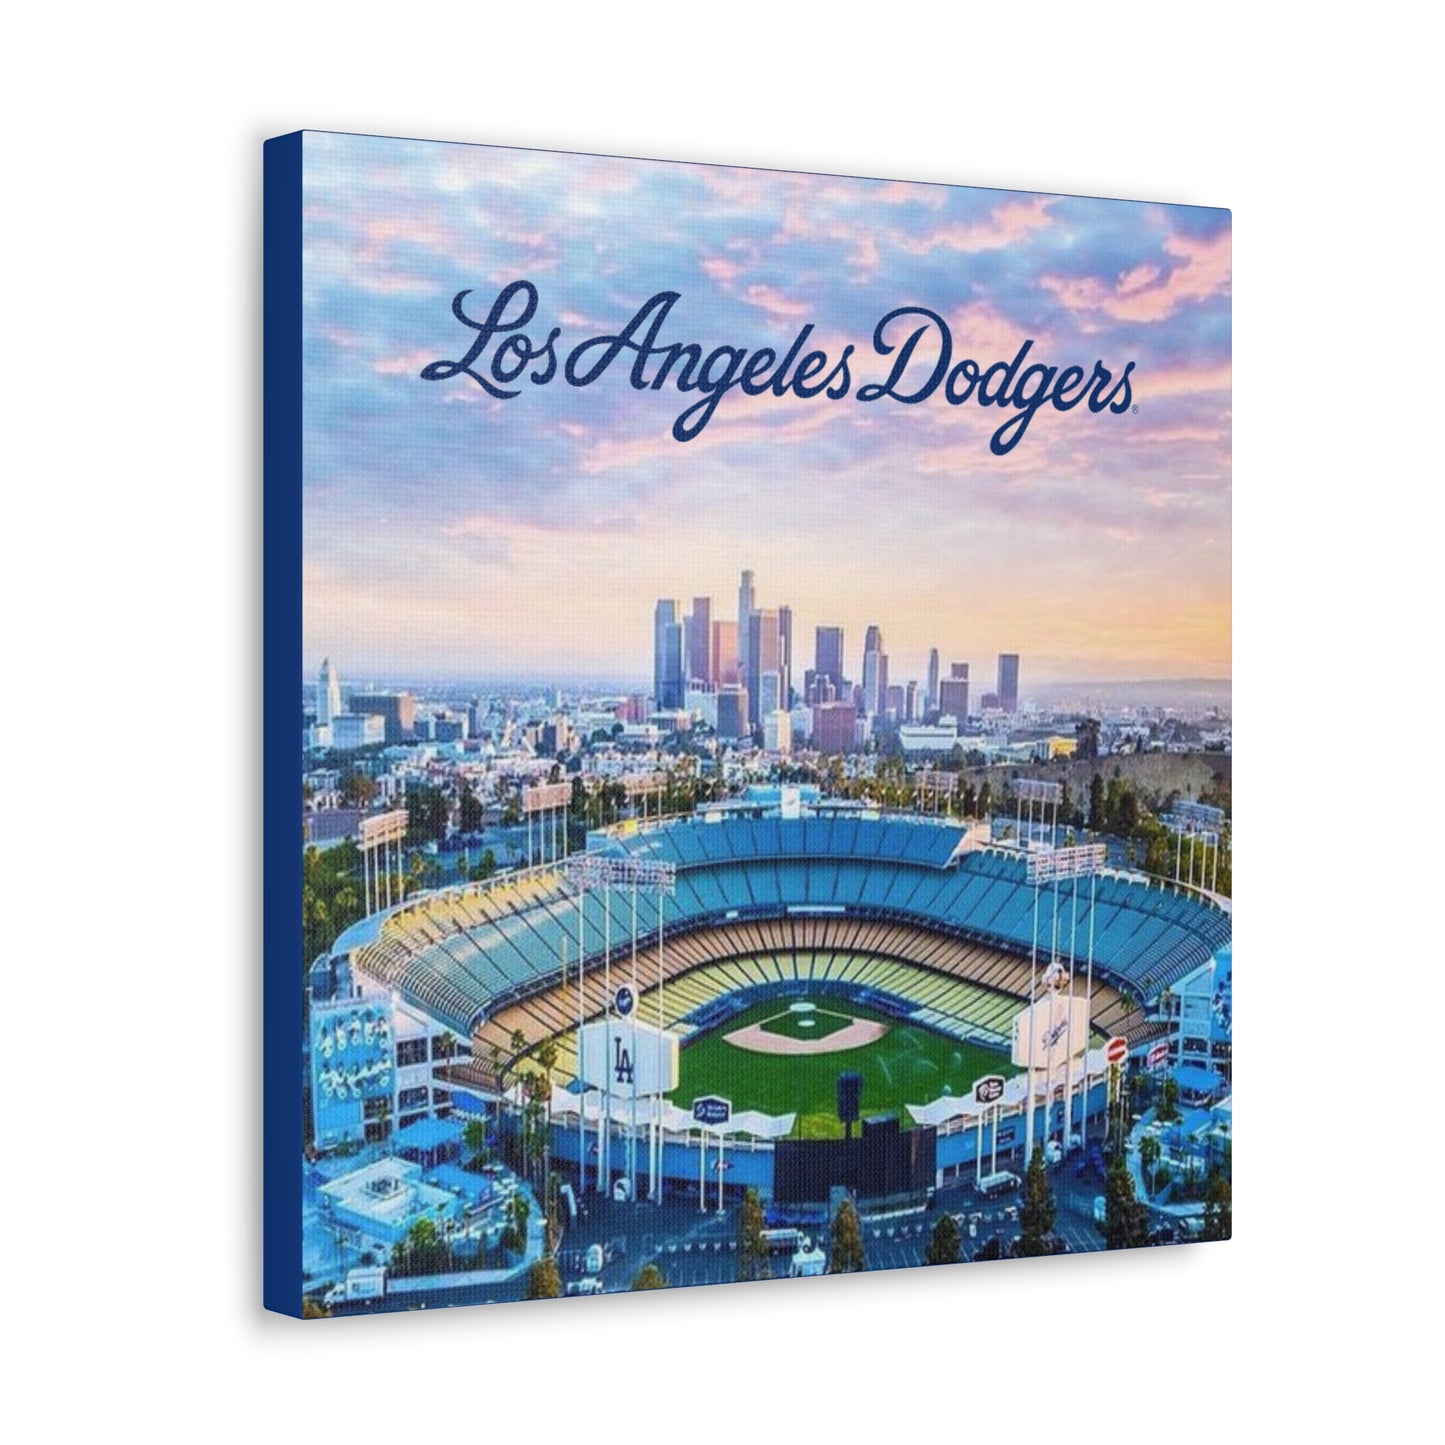 Los Angeles Dodgers - Canvas Gallery Wraps